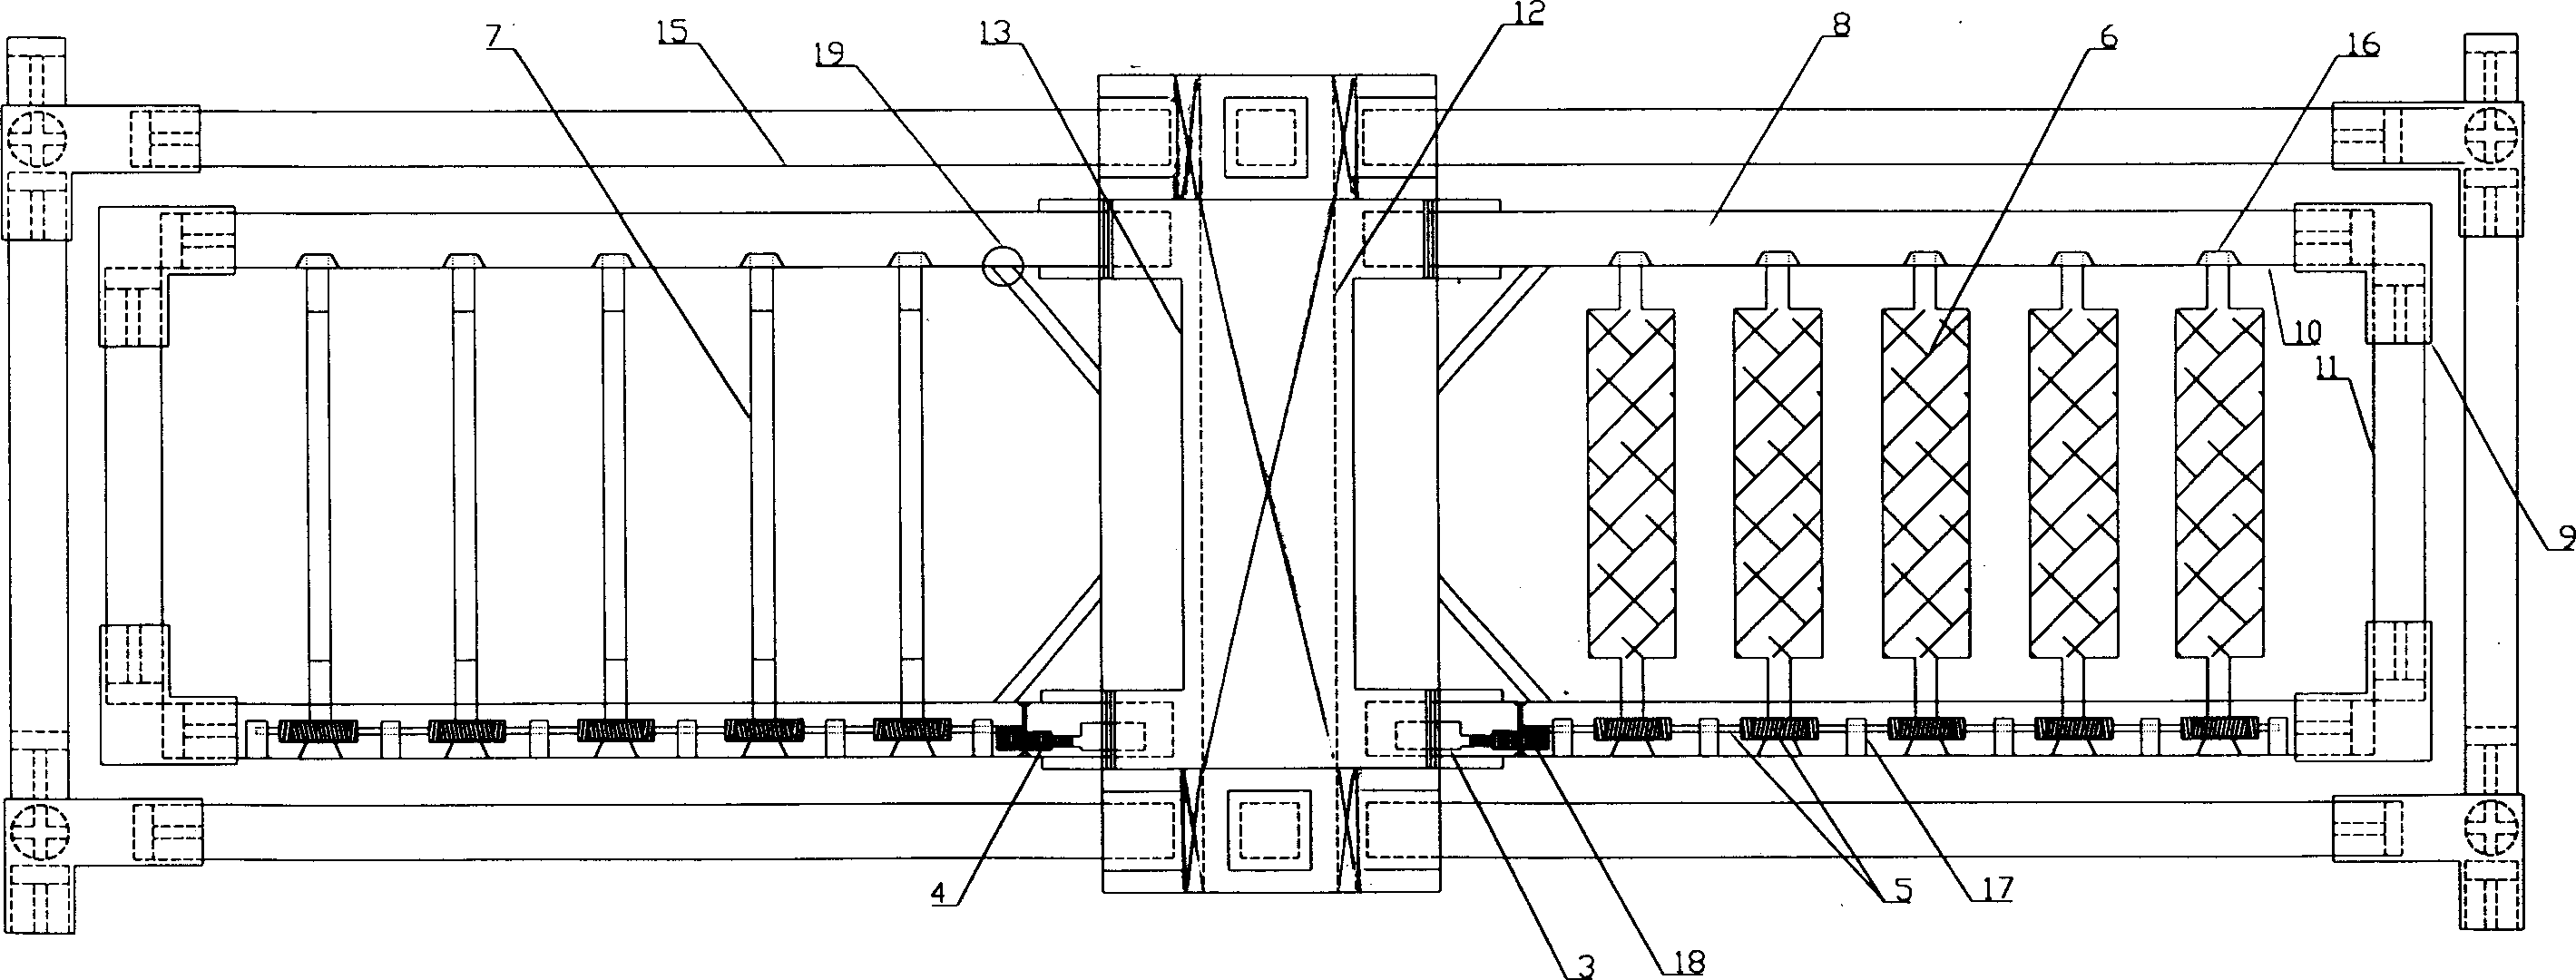 Integrated vertical shaft windmill